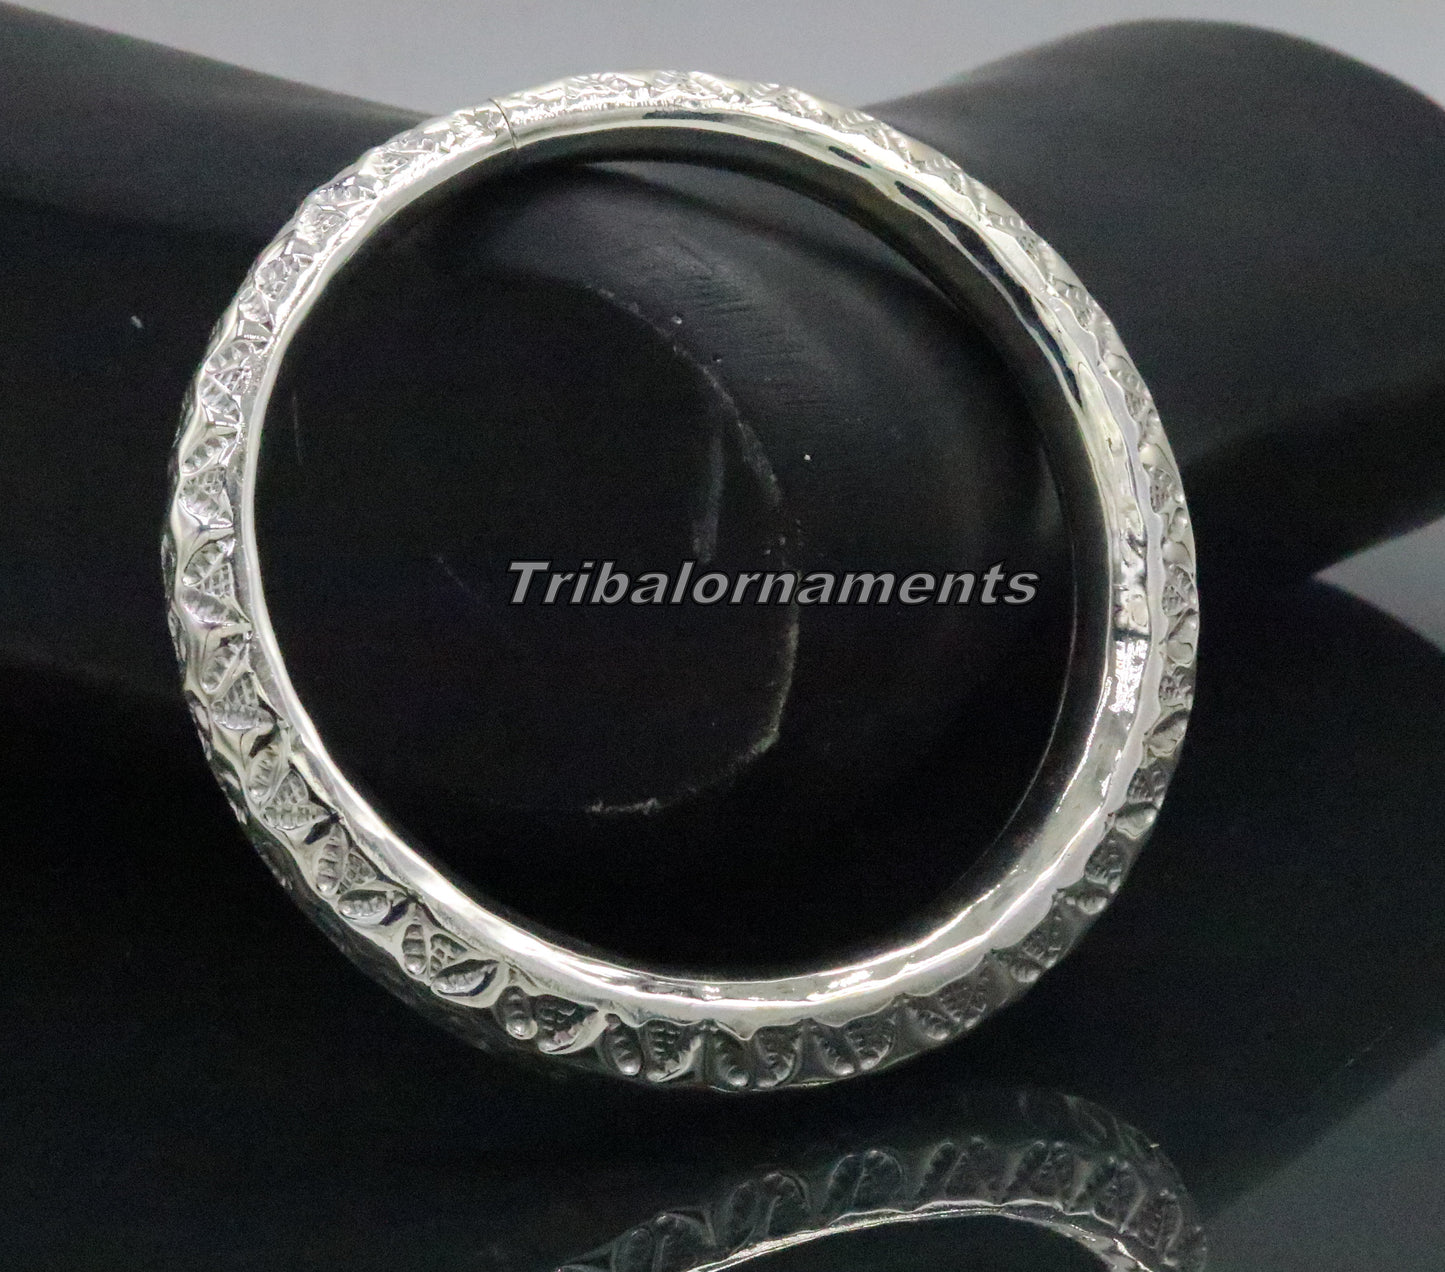 Vintage design handmade fabulous 925 sterling silver bangle bracelet kada unisex jewelry, awesome customized oxidized trendy jewelry nsk244 - TRIBAL ORNAMENTS